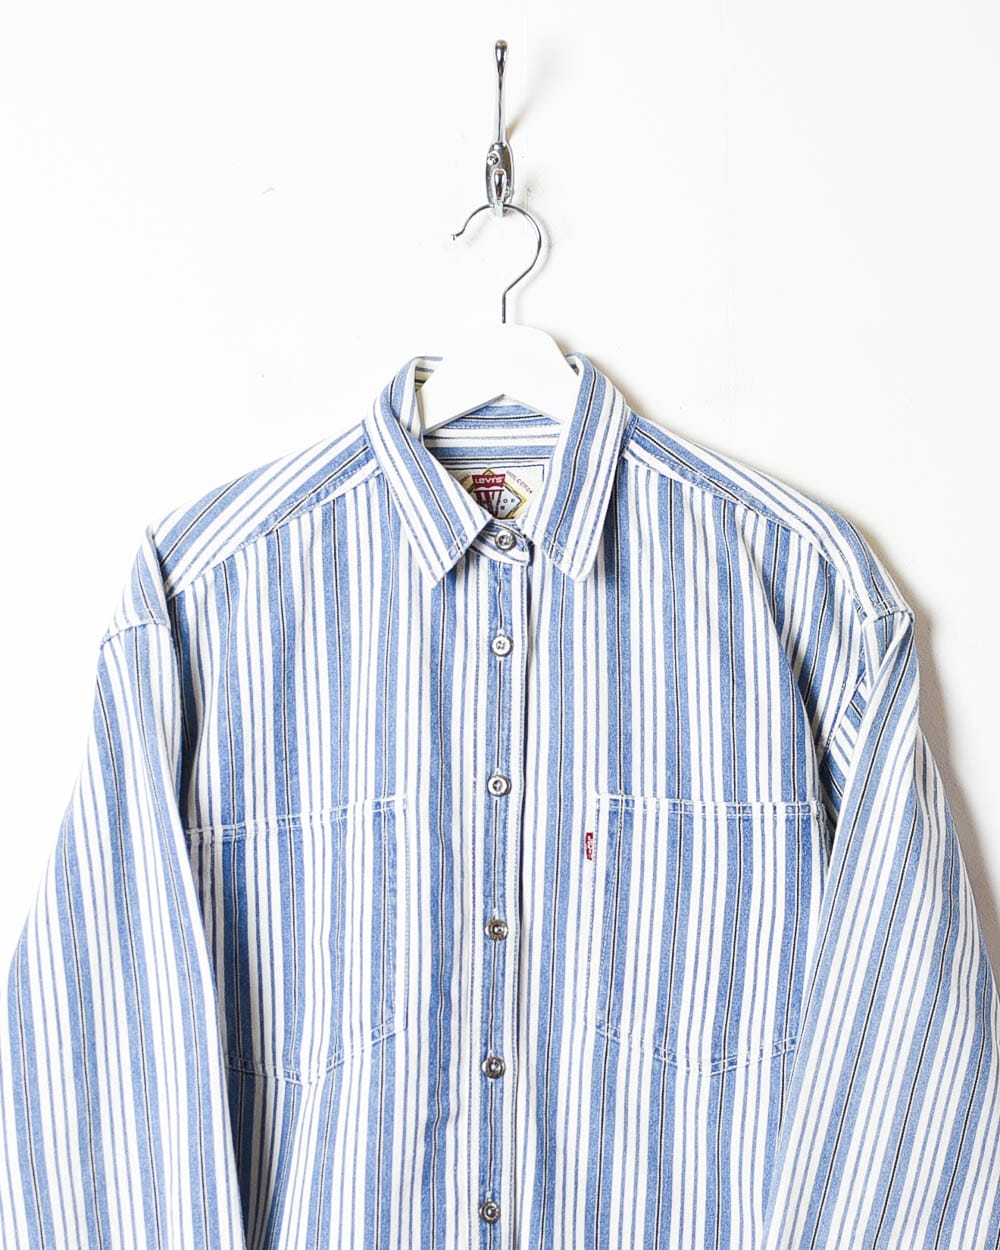 Blue Levi's Striped Shirt - Small Women's